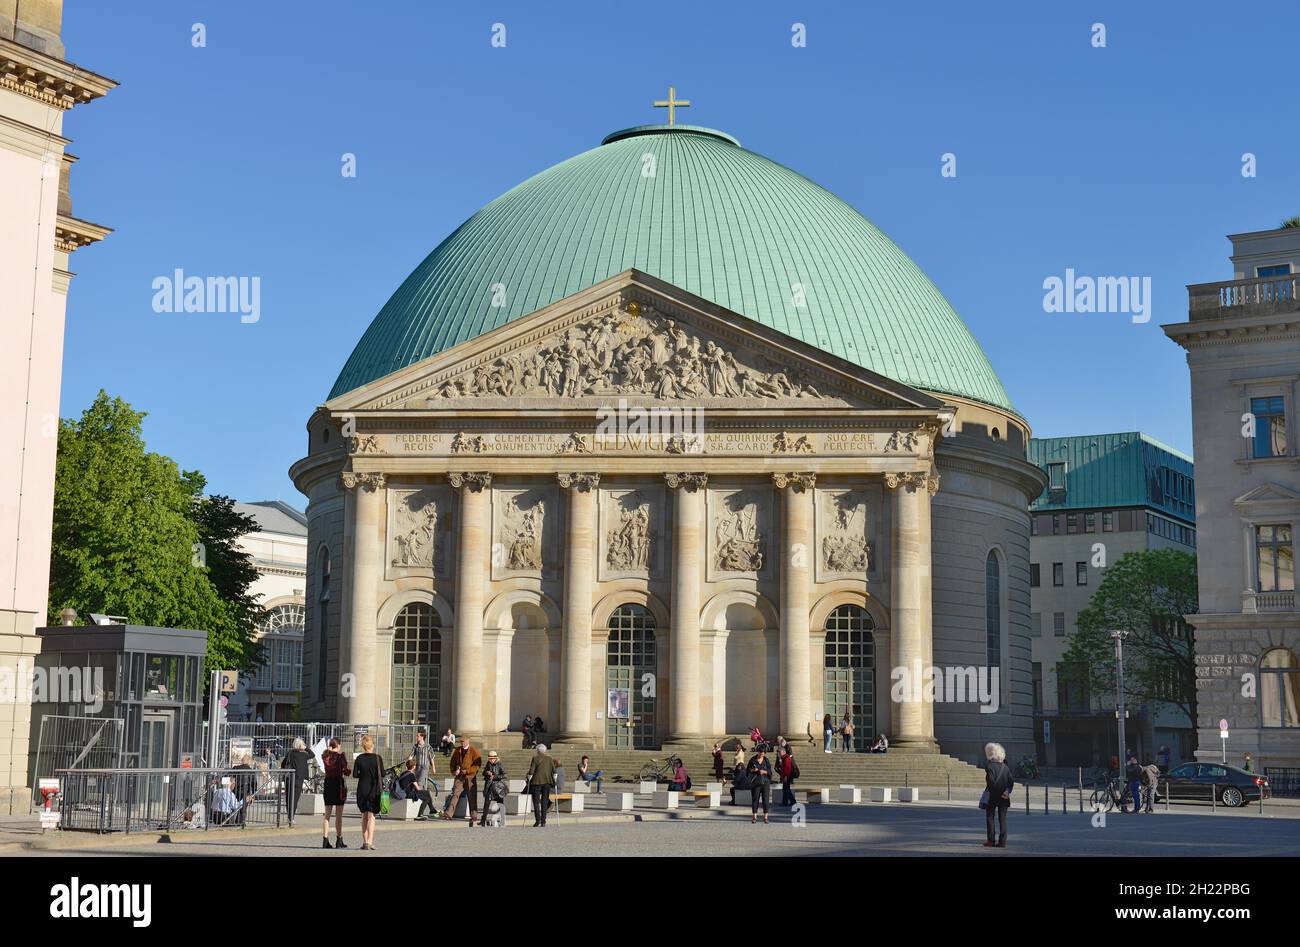 Cattedrale di S. Edvige, Bebelplatz, Mitte, Berlino, Germania Foto Stock